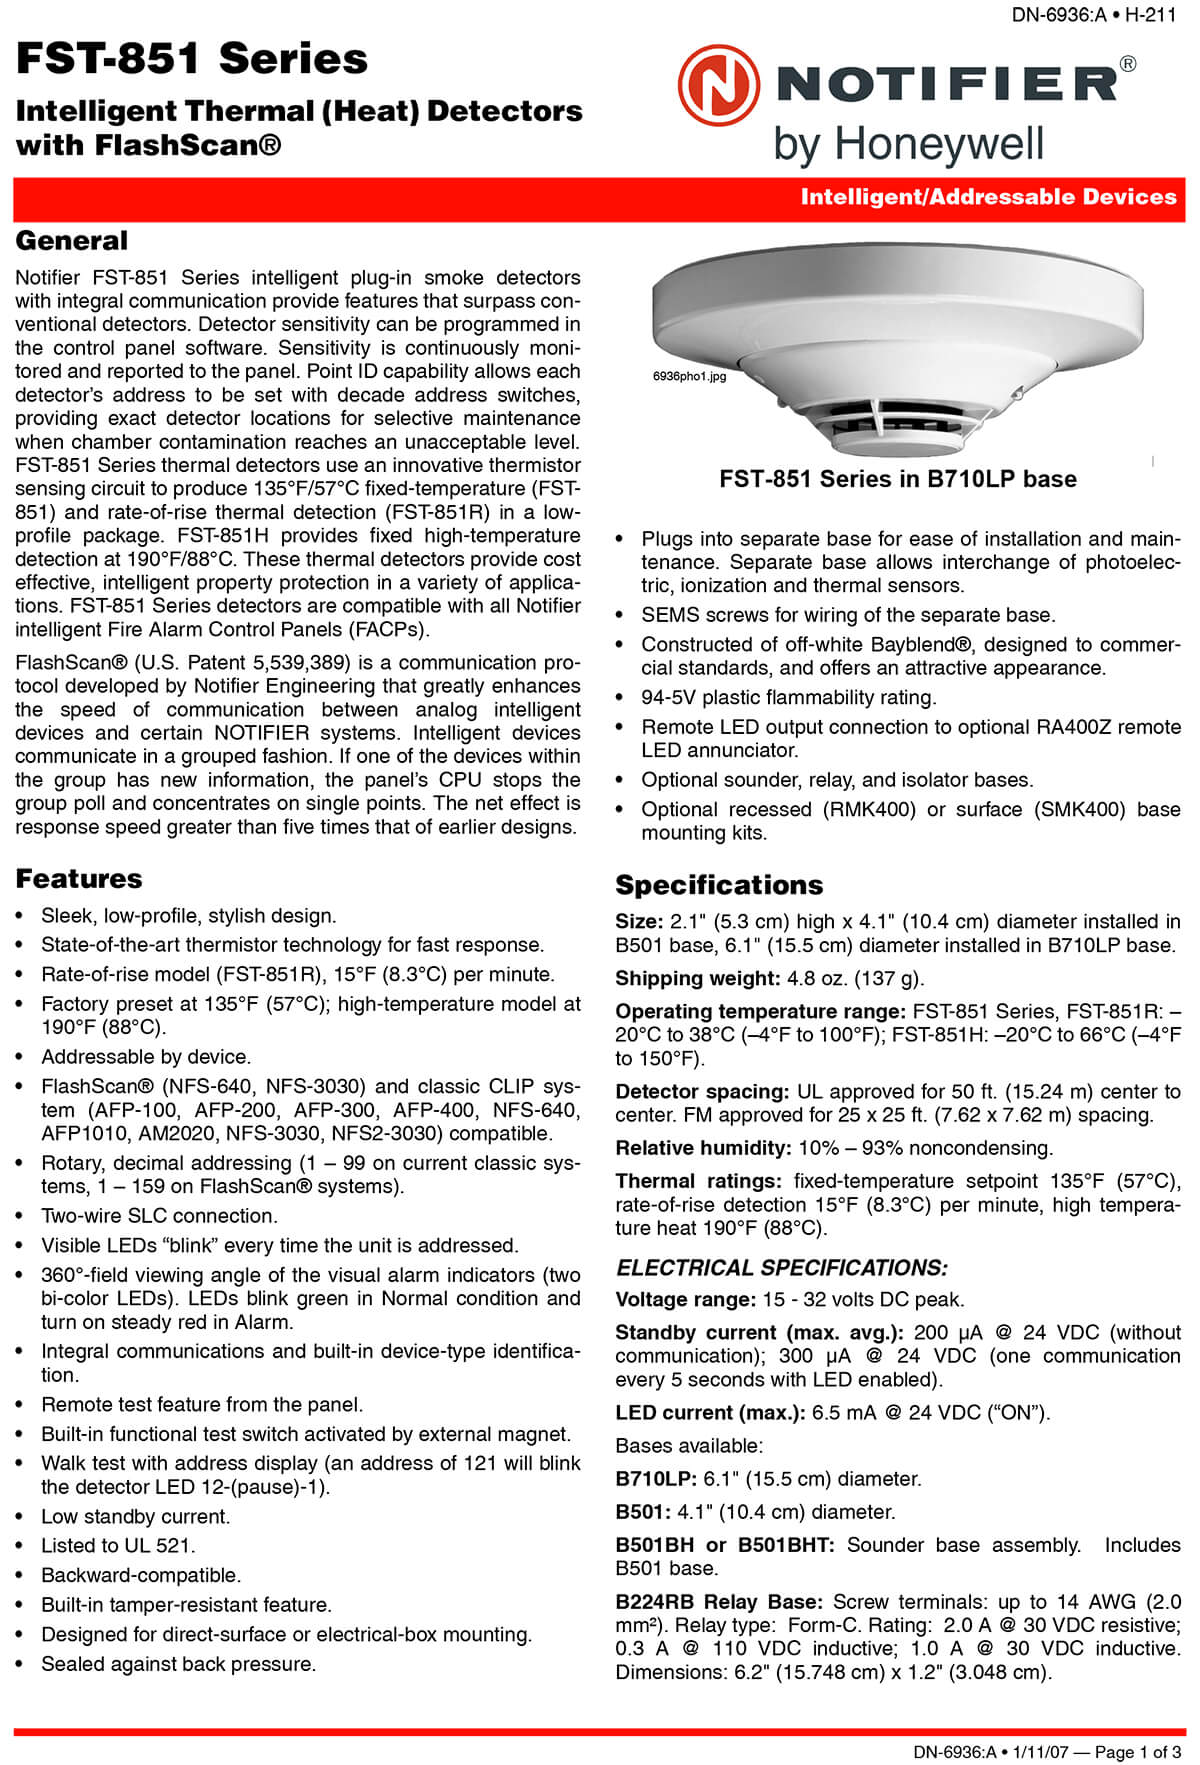 Intelligent Thermal (Heat) Detector FST-851 Series